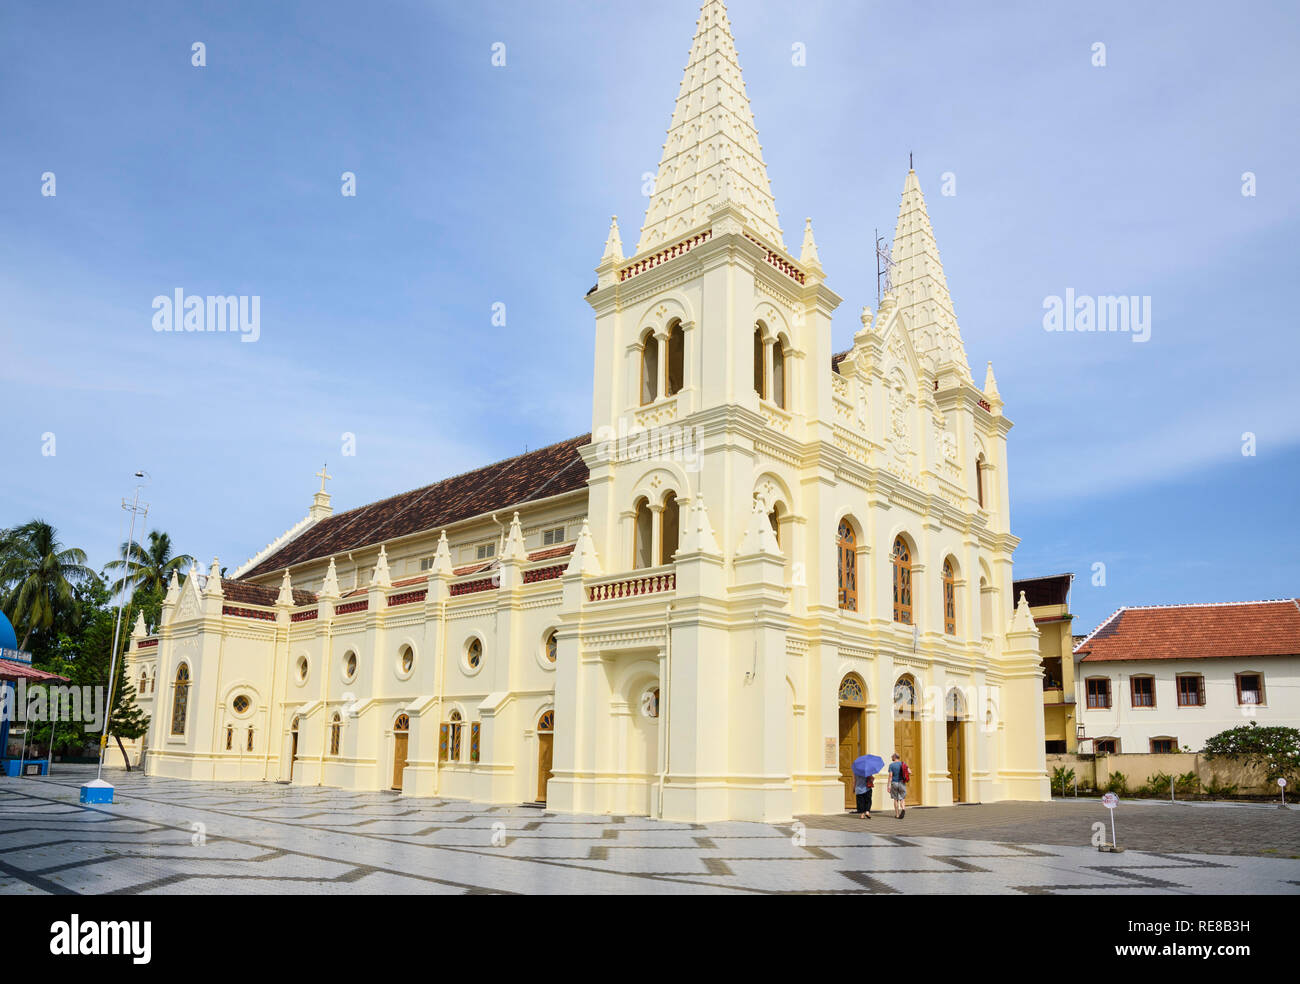 Basilique-cathédrale de Santa Cruz, fort Cochin, Kochi, Kerala, Inde Banque D'Images